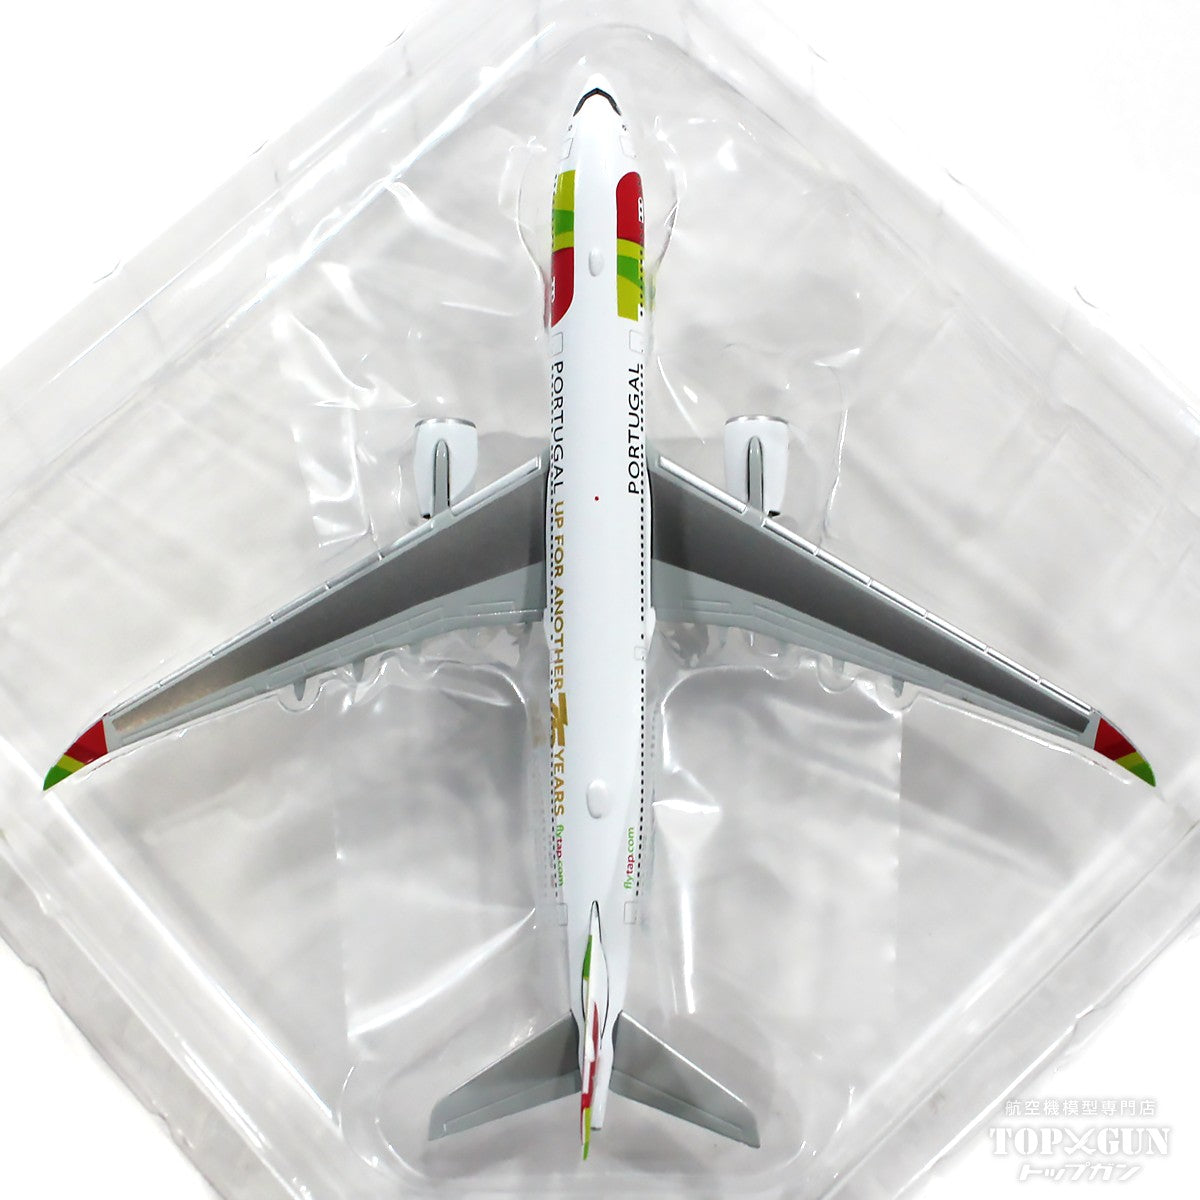 A330-900neo TAPポルトガル航空 特別塗装「創業75周年」 2020年 CS-TUD